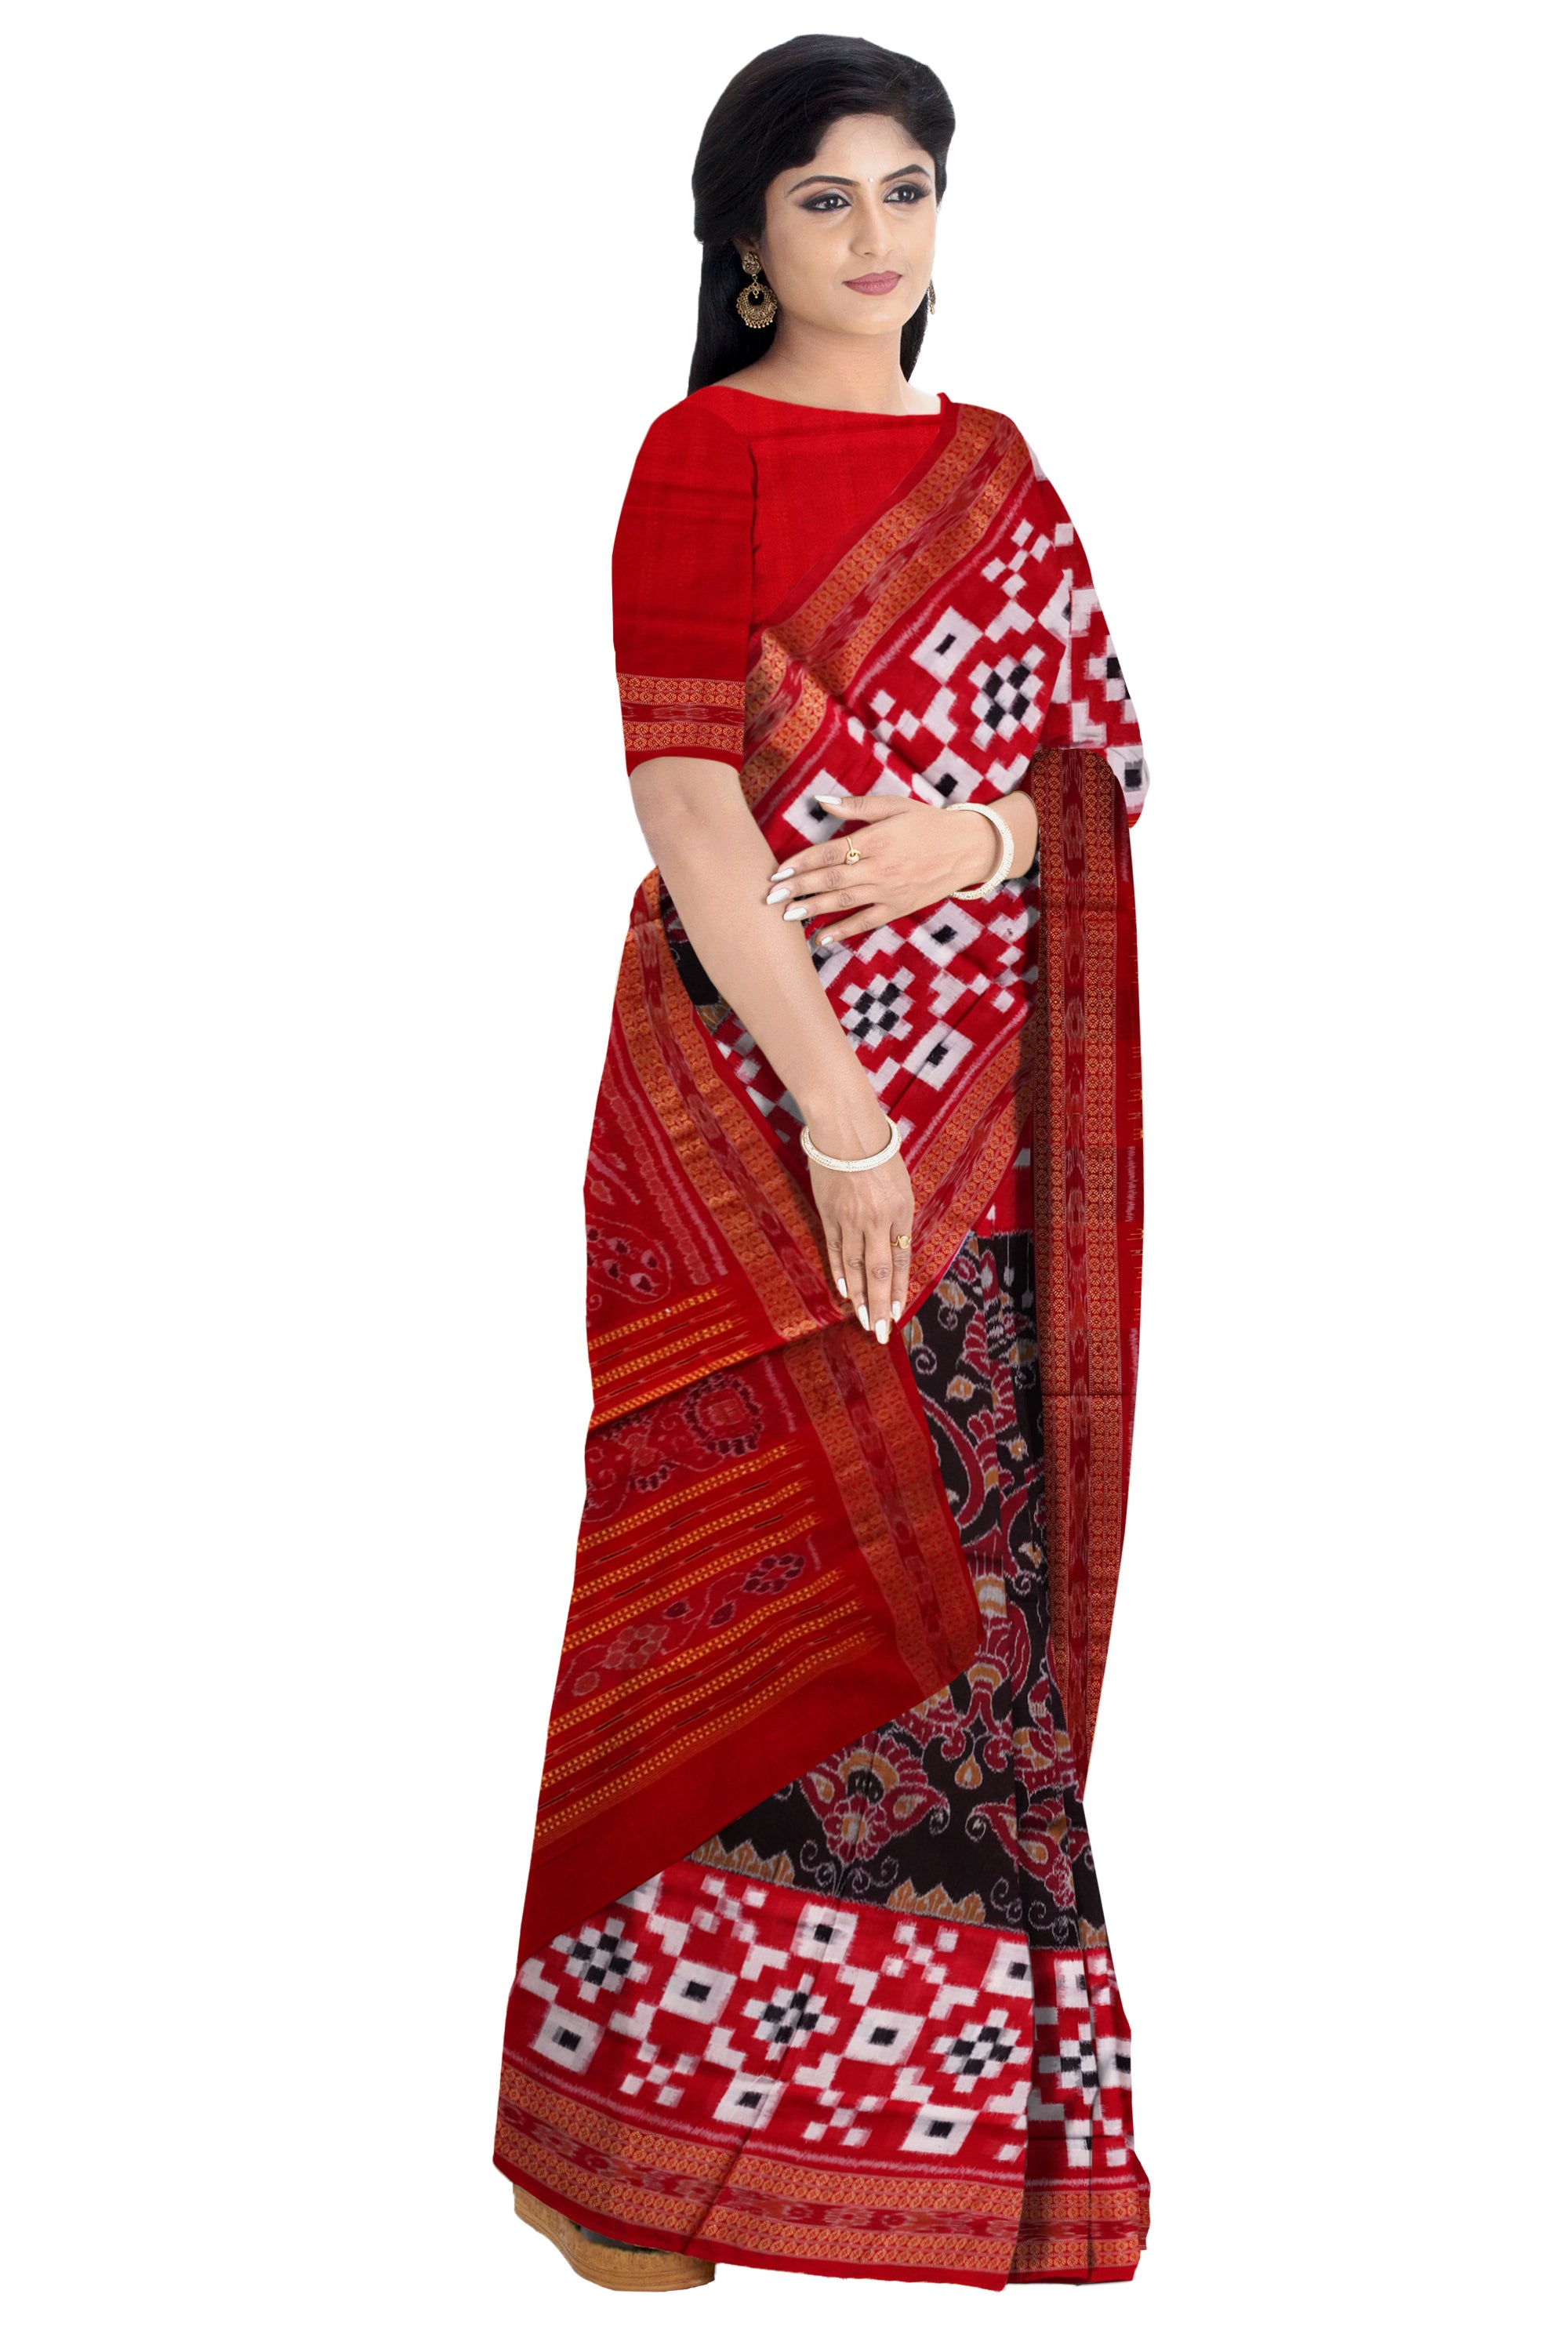 Peacock bandha with Pasapali pattern full body work sambalpuri cotton saree in Black and Red color. - Koshali Arts & Crafts Enterprise